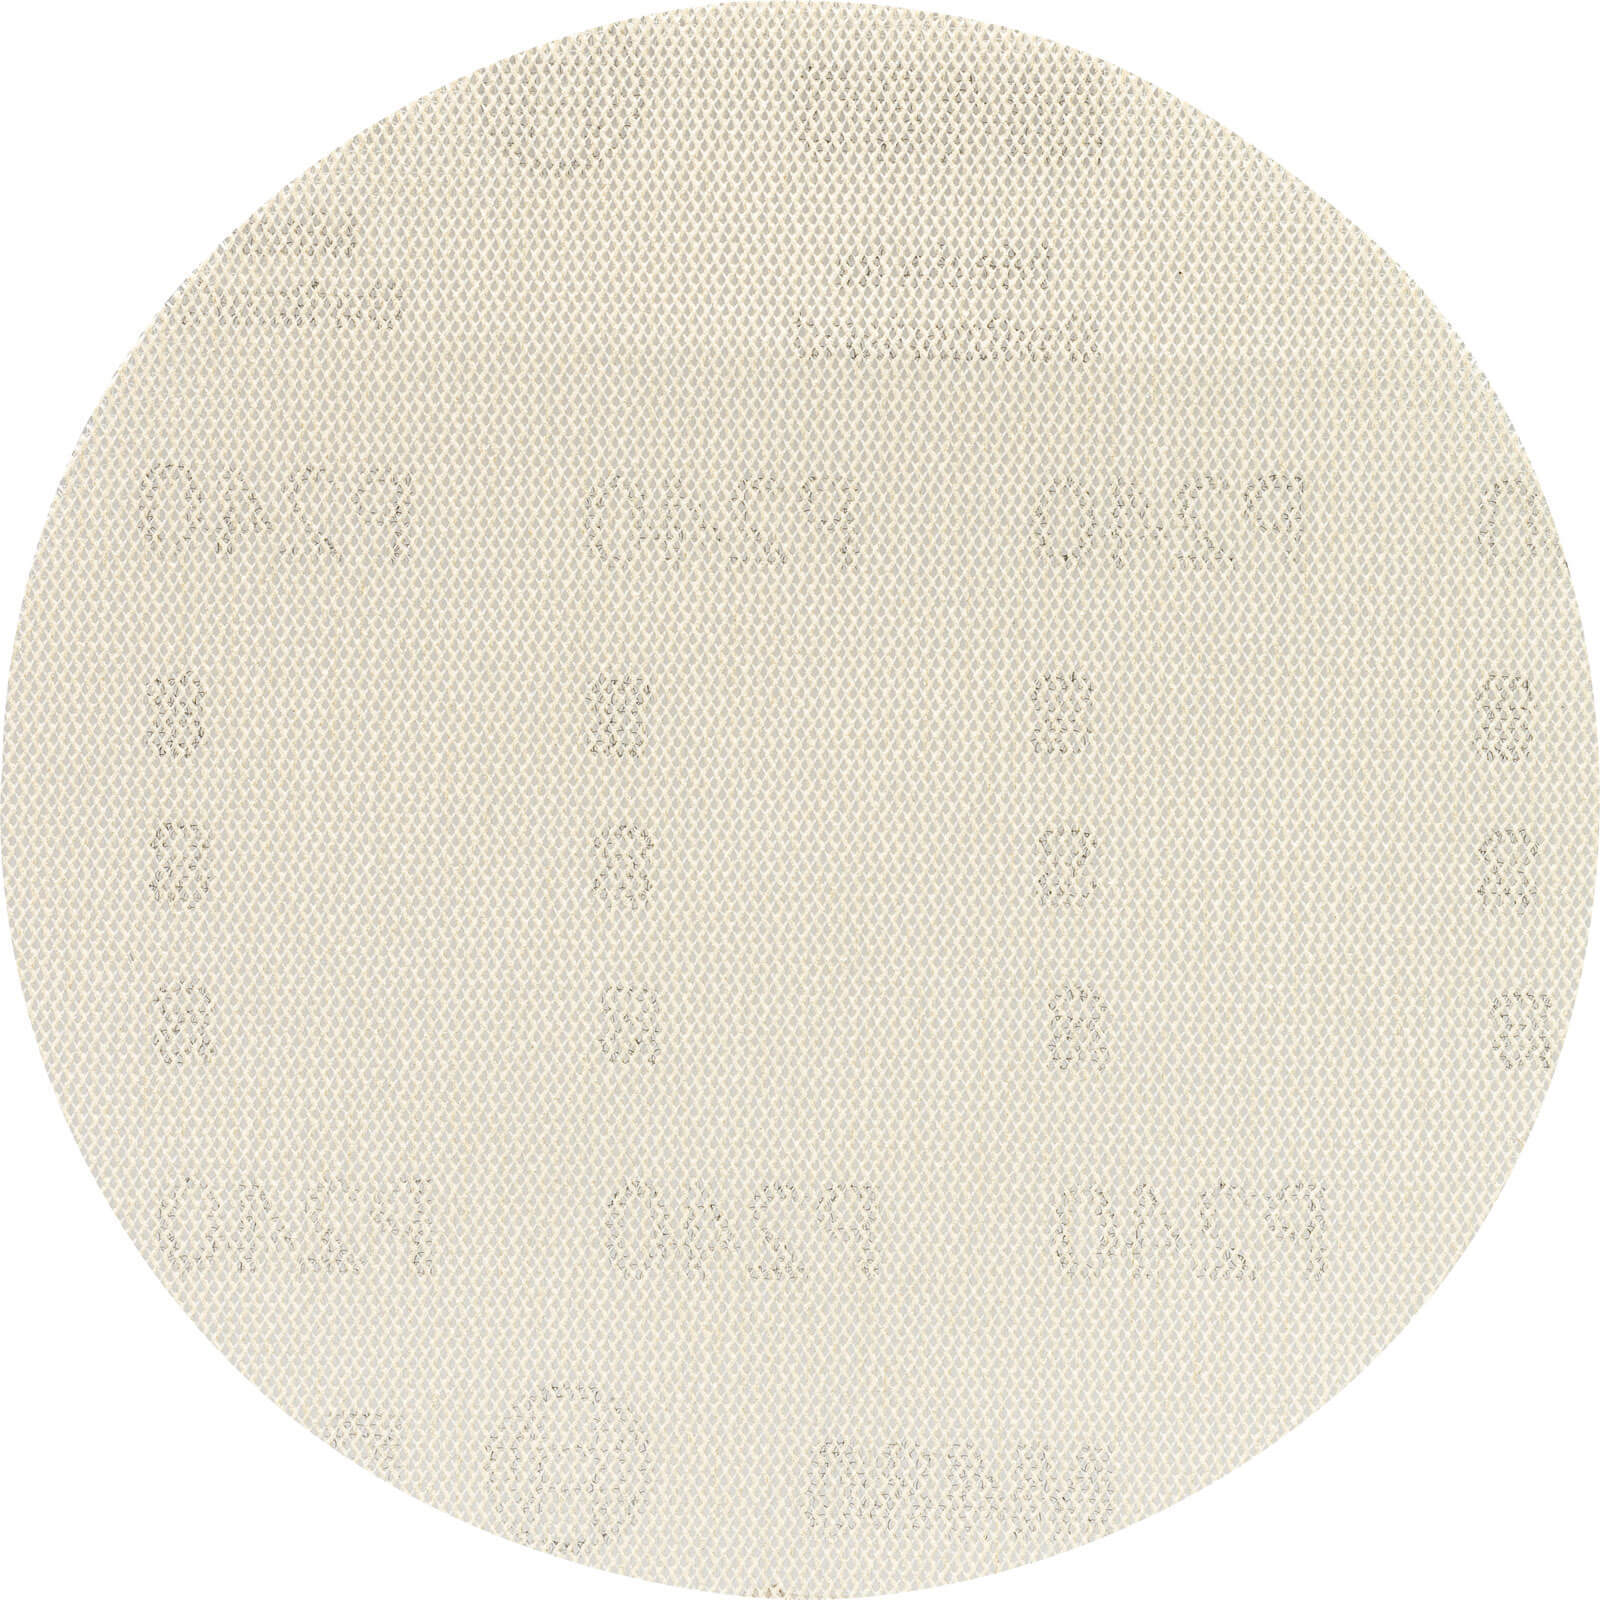 Image of Bosch M480 125mm Net Abrasive Sanding Disc 125mm 240g Pack of 50